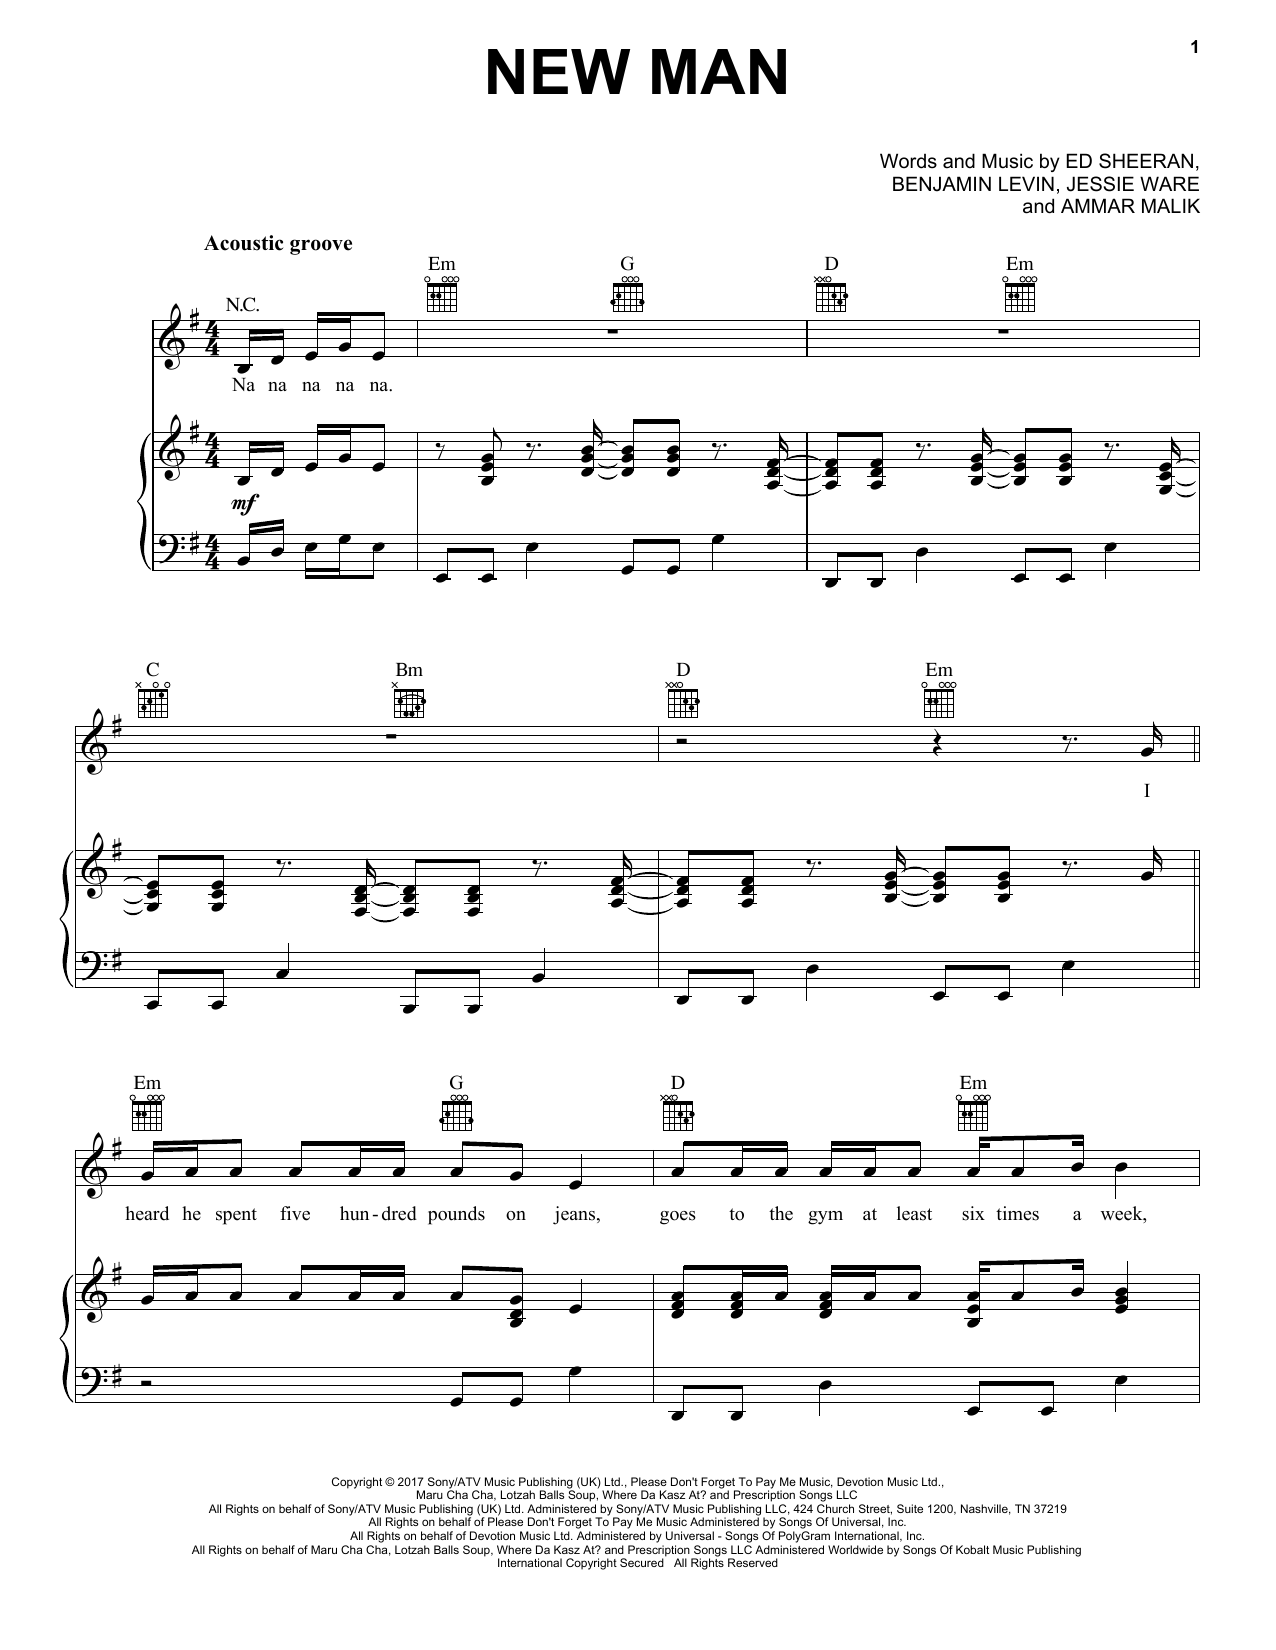 Ed Sheeran New Man Sheet Music Notes & Chords for Piano, Vocal & Guitar (Right-Hand Melody) - Download or Print PDF